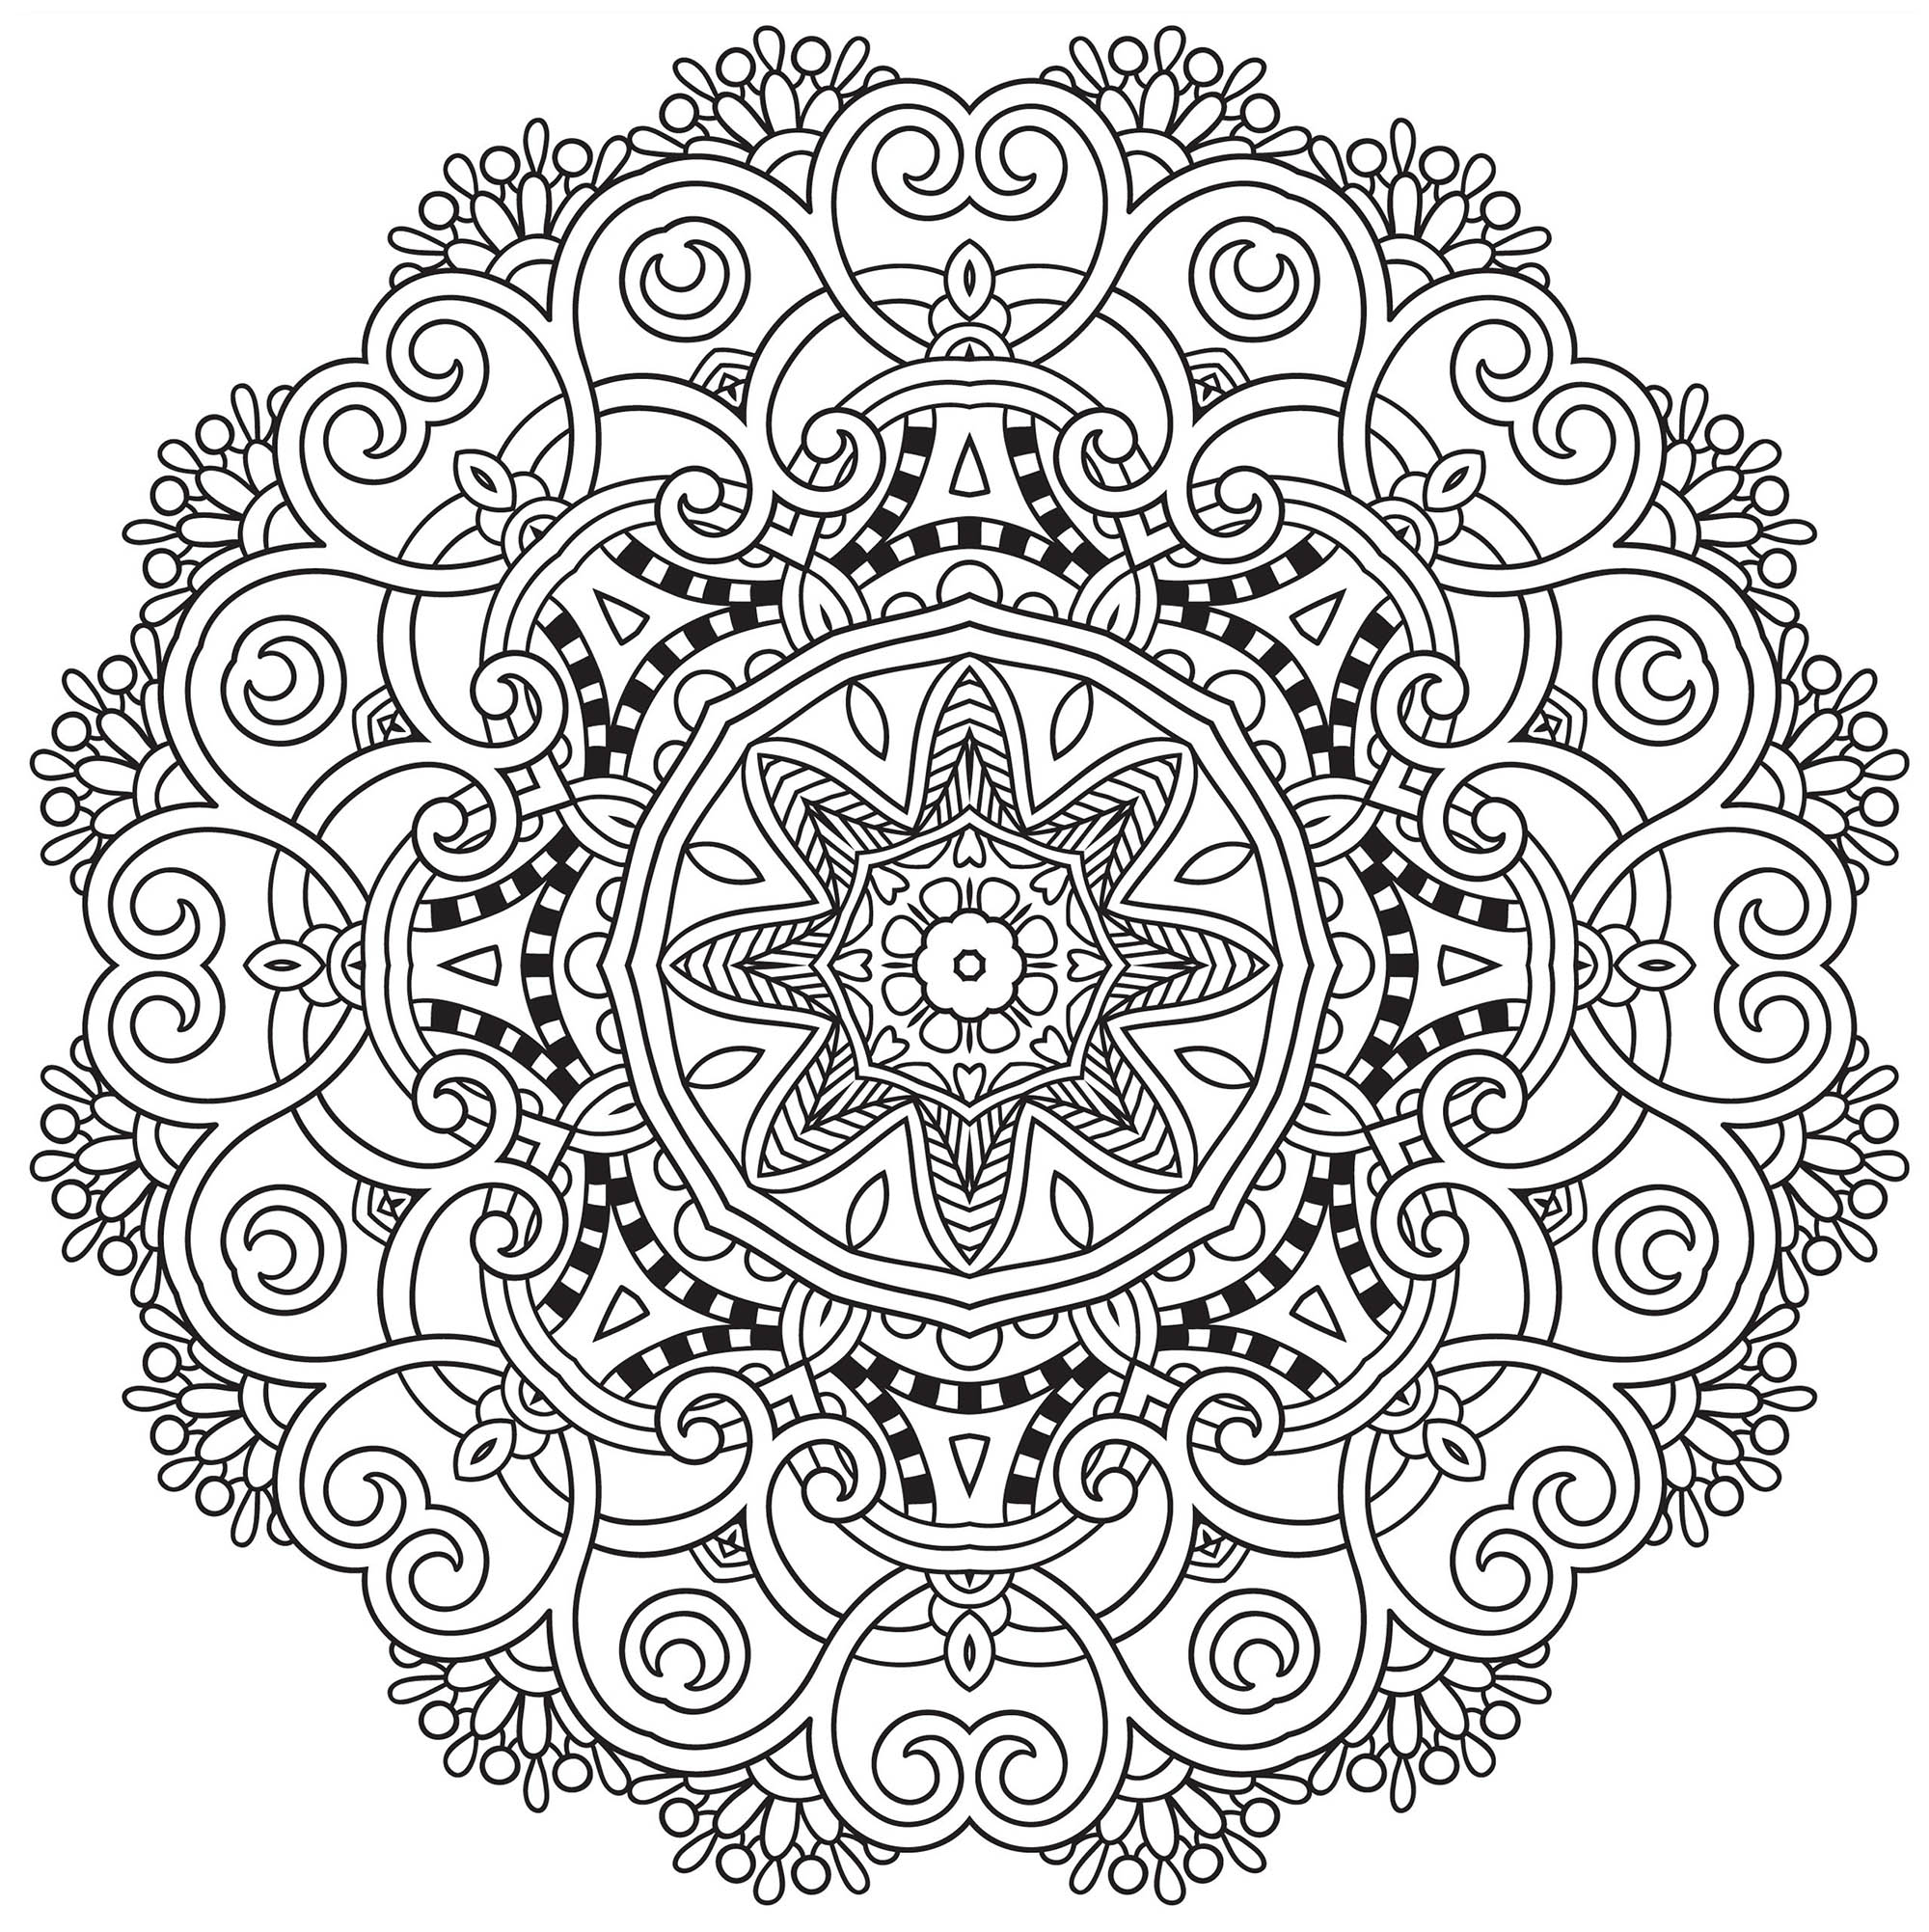 Mandala to download in pdf - 2 - Mandalas Adult Coloring Pages